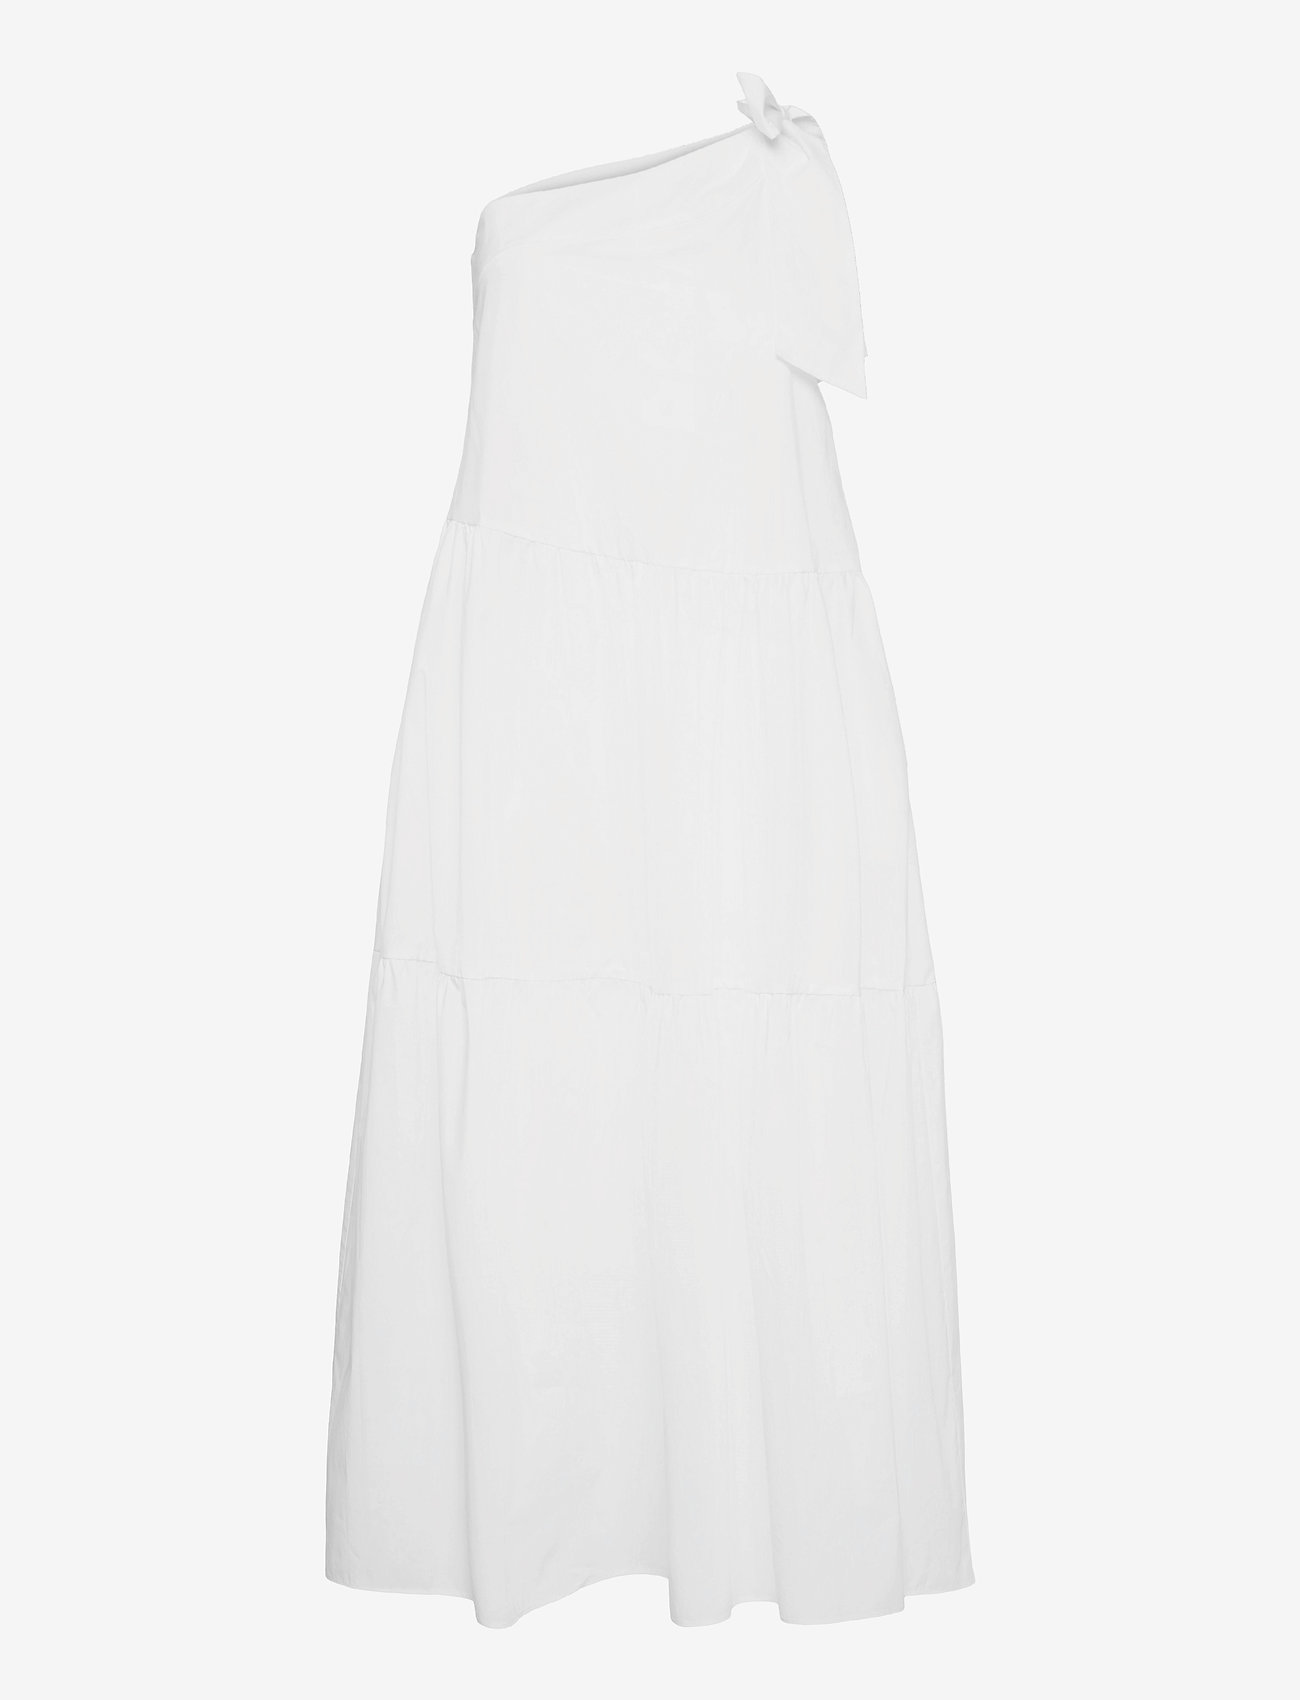 IVY OAK - ONE SHOULDER DRESS MAXI LENGHT - bright white - 0